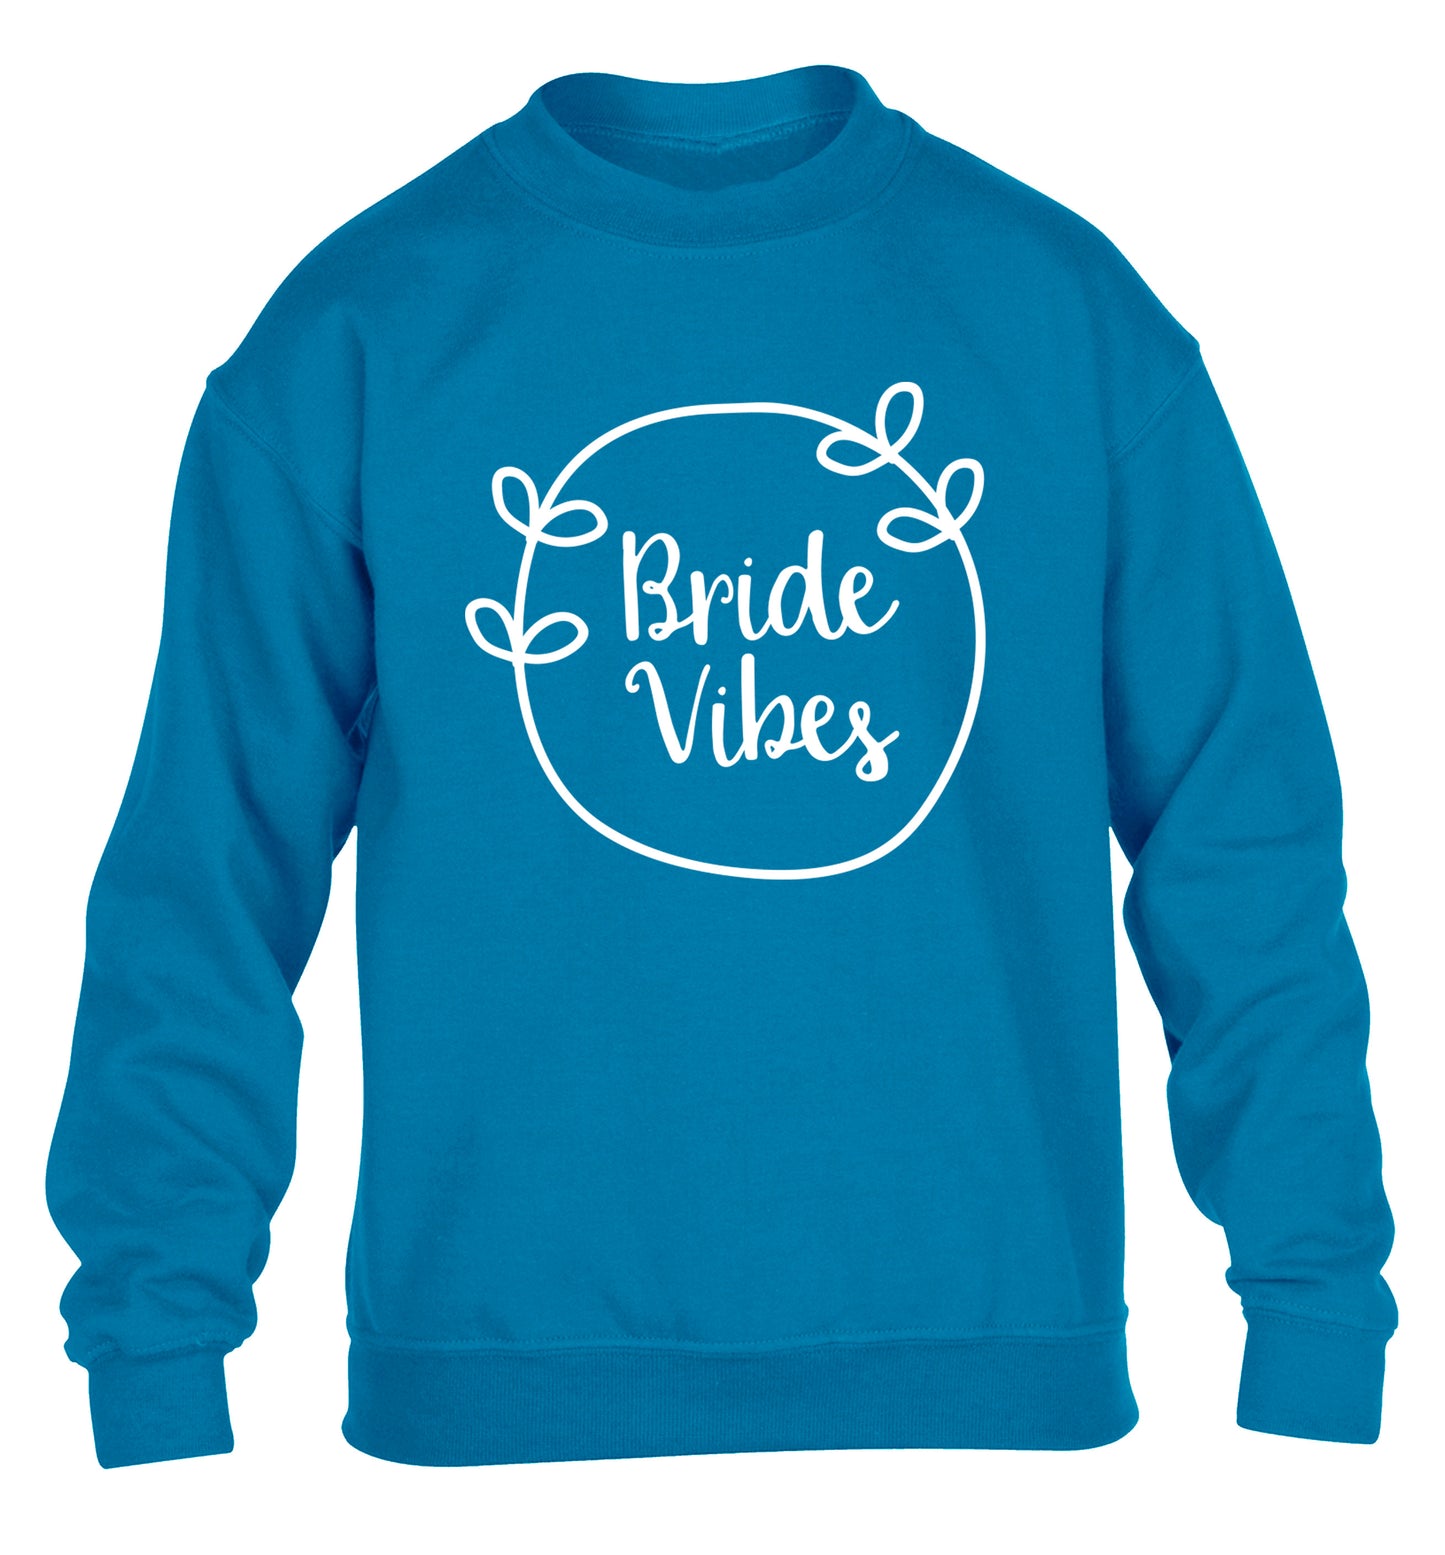 Bride Vibes children's blue sweater 12-13 Years